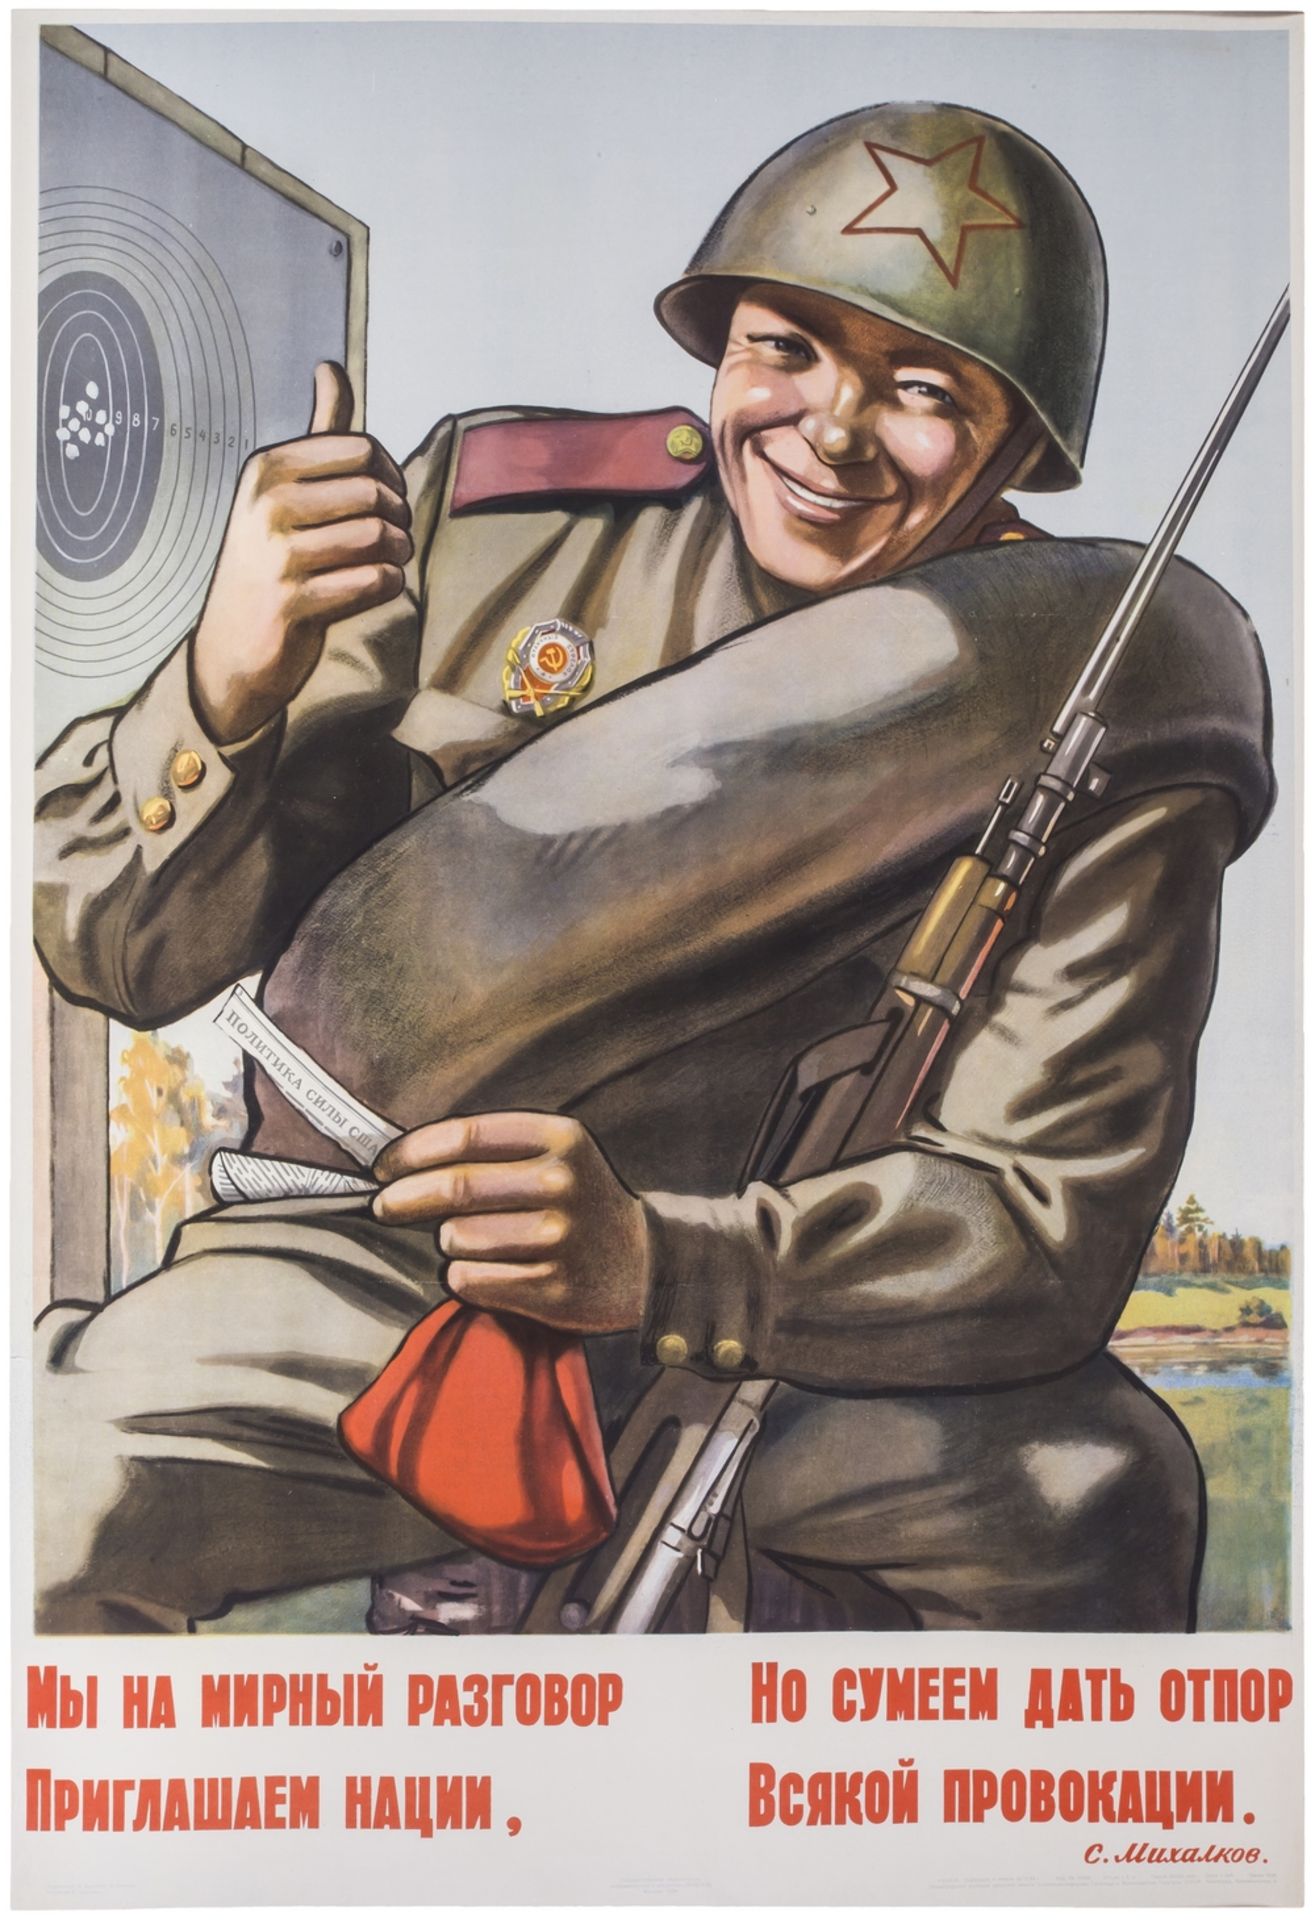 [Soviet art]. Briskin, V., Ivanov, K. Poster "We invite all nations to peaceful negotiation, but we 